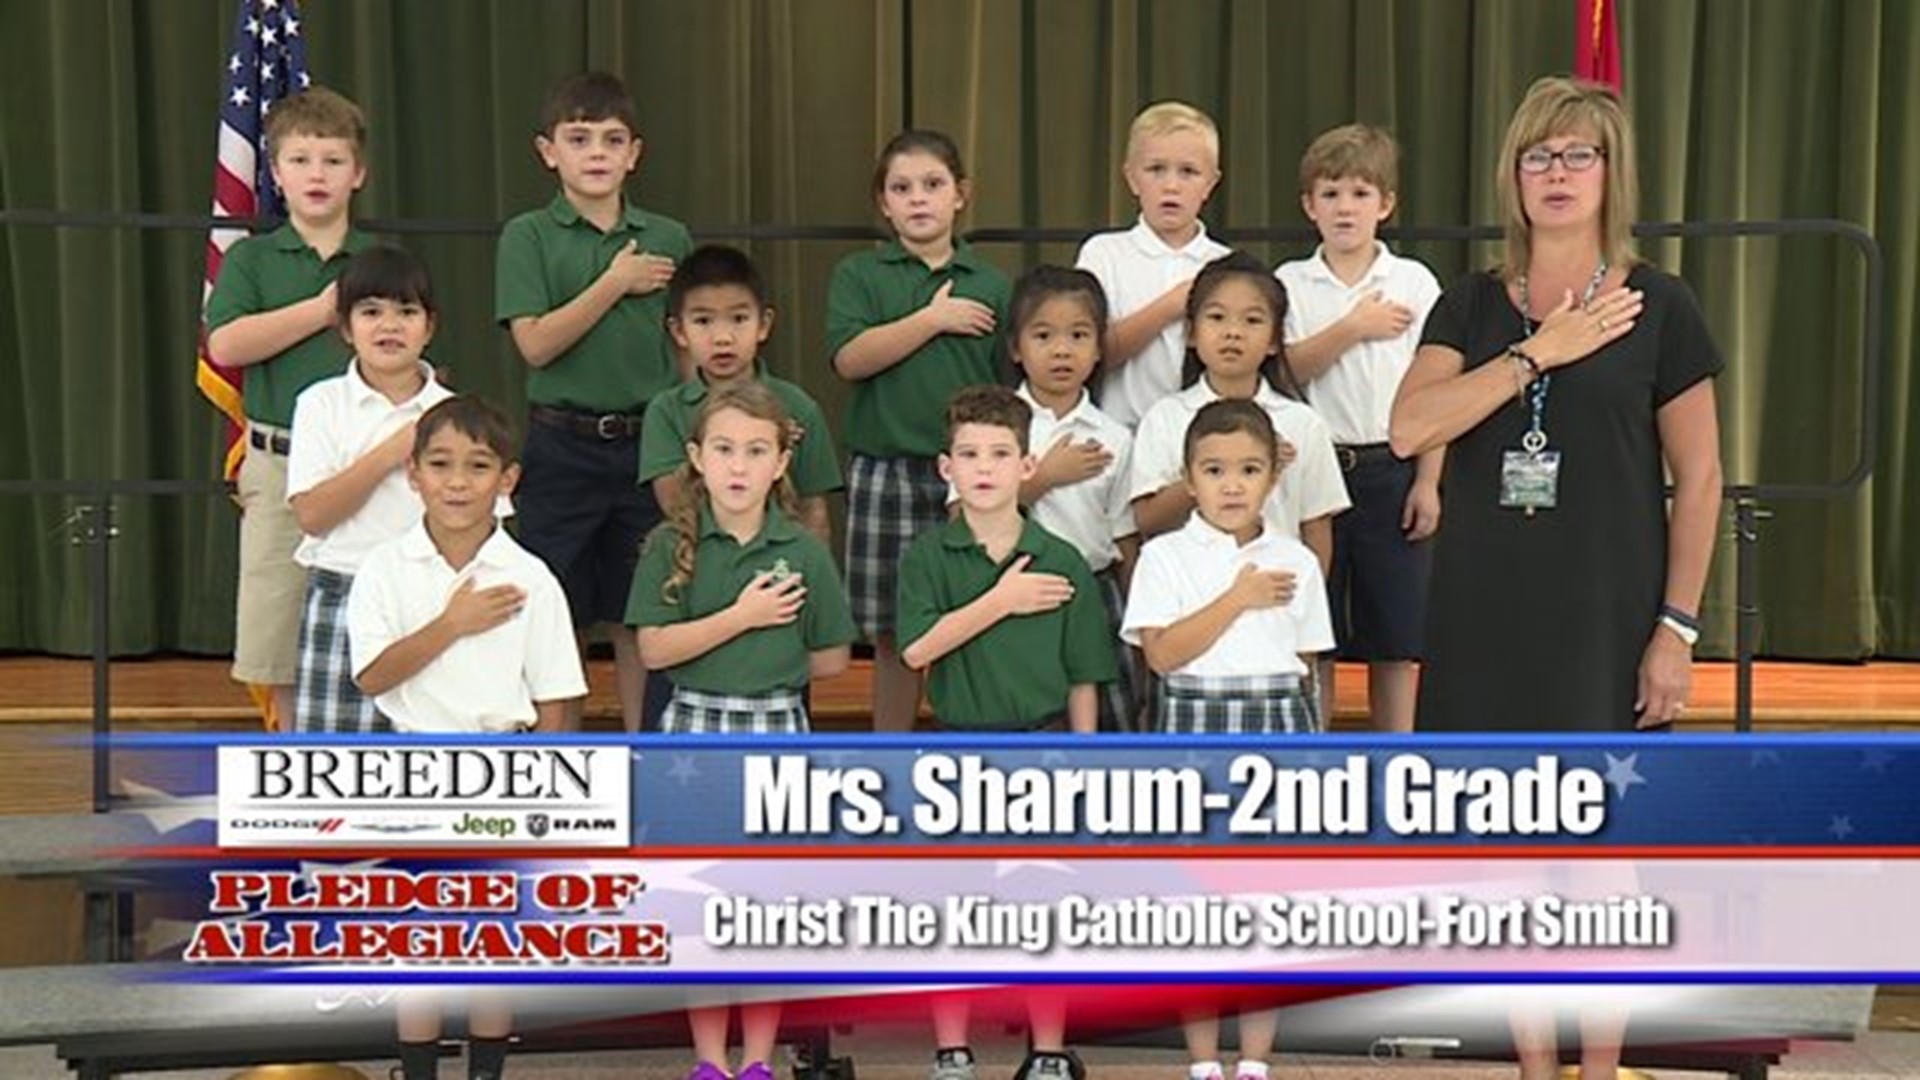 Christ the King Catholic School - Fort Smith - Mrs. Sharum - 2nd Grade